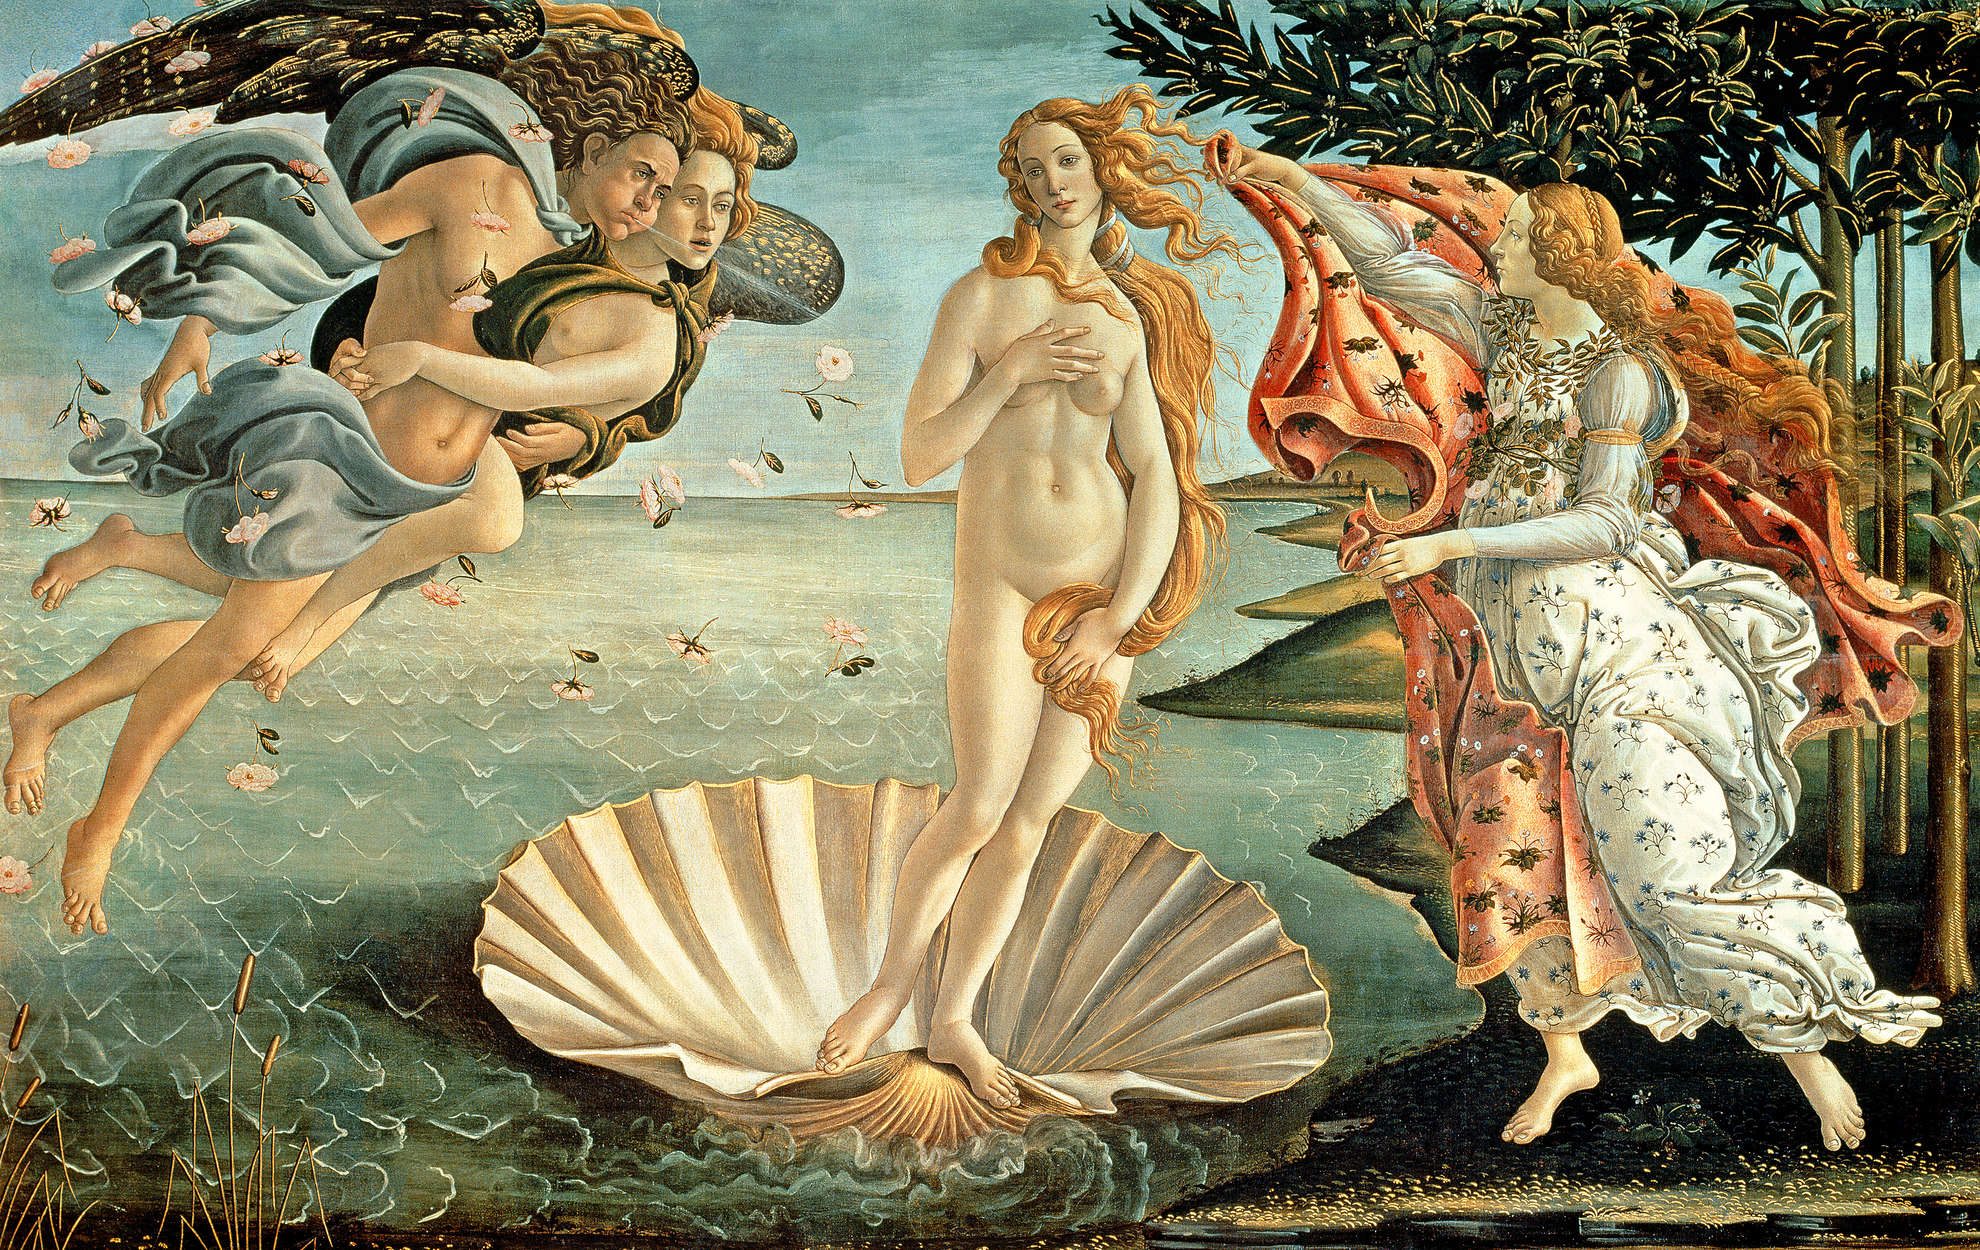             Photo wallpaper "The Birth of Venus" by Sandro Botticelli
        